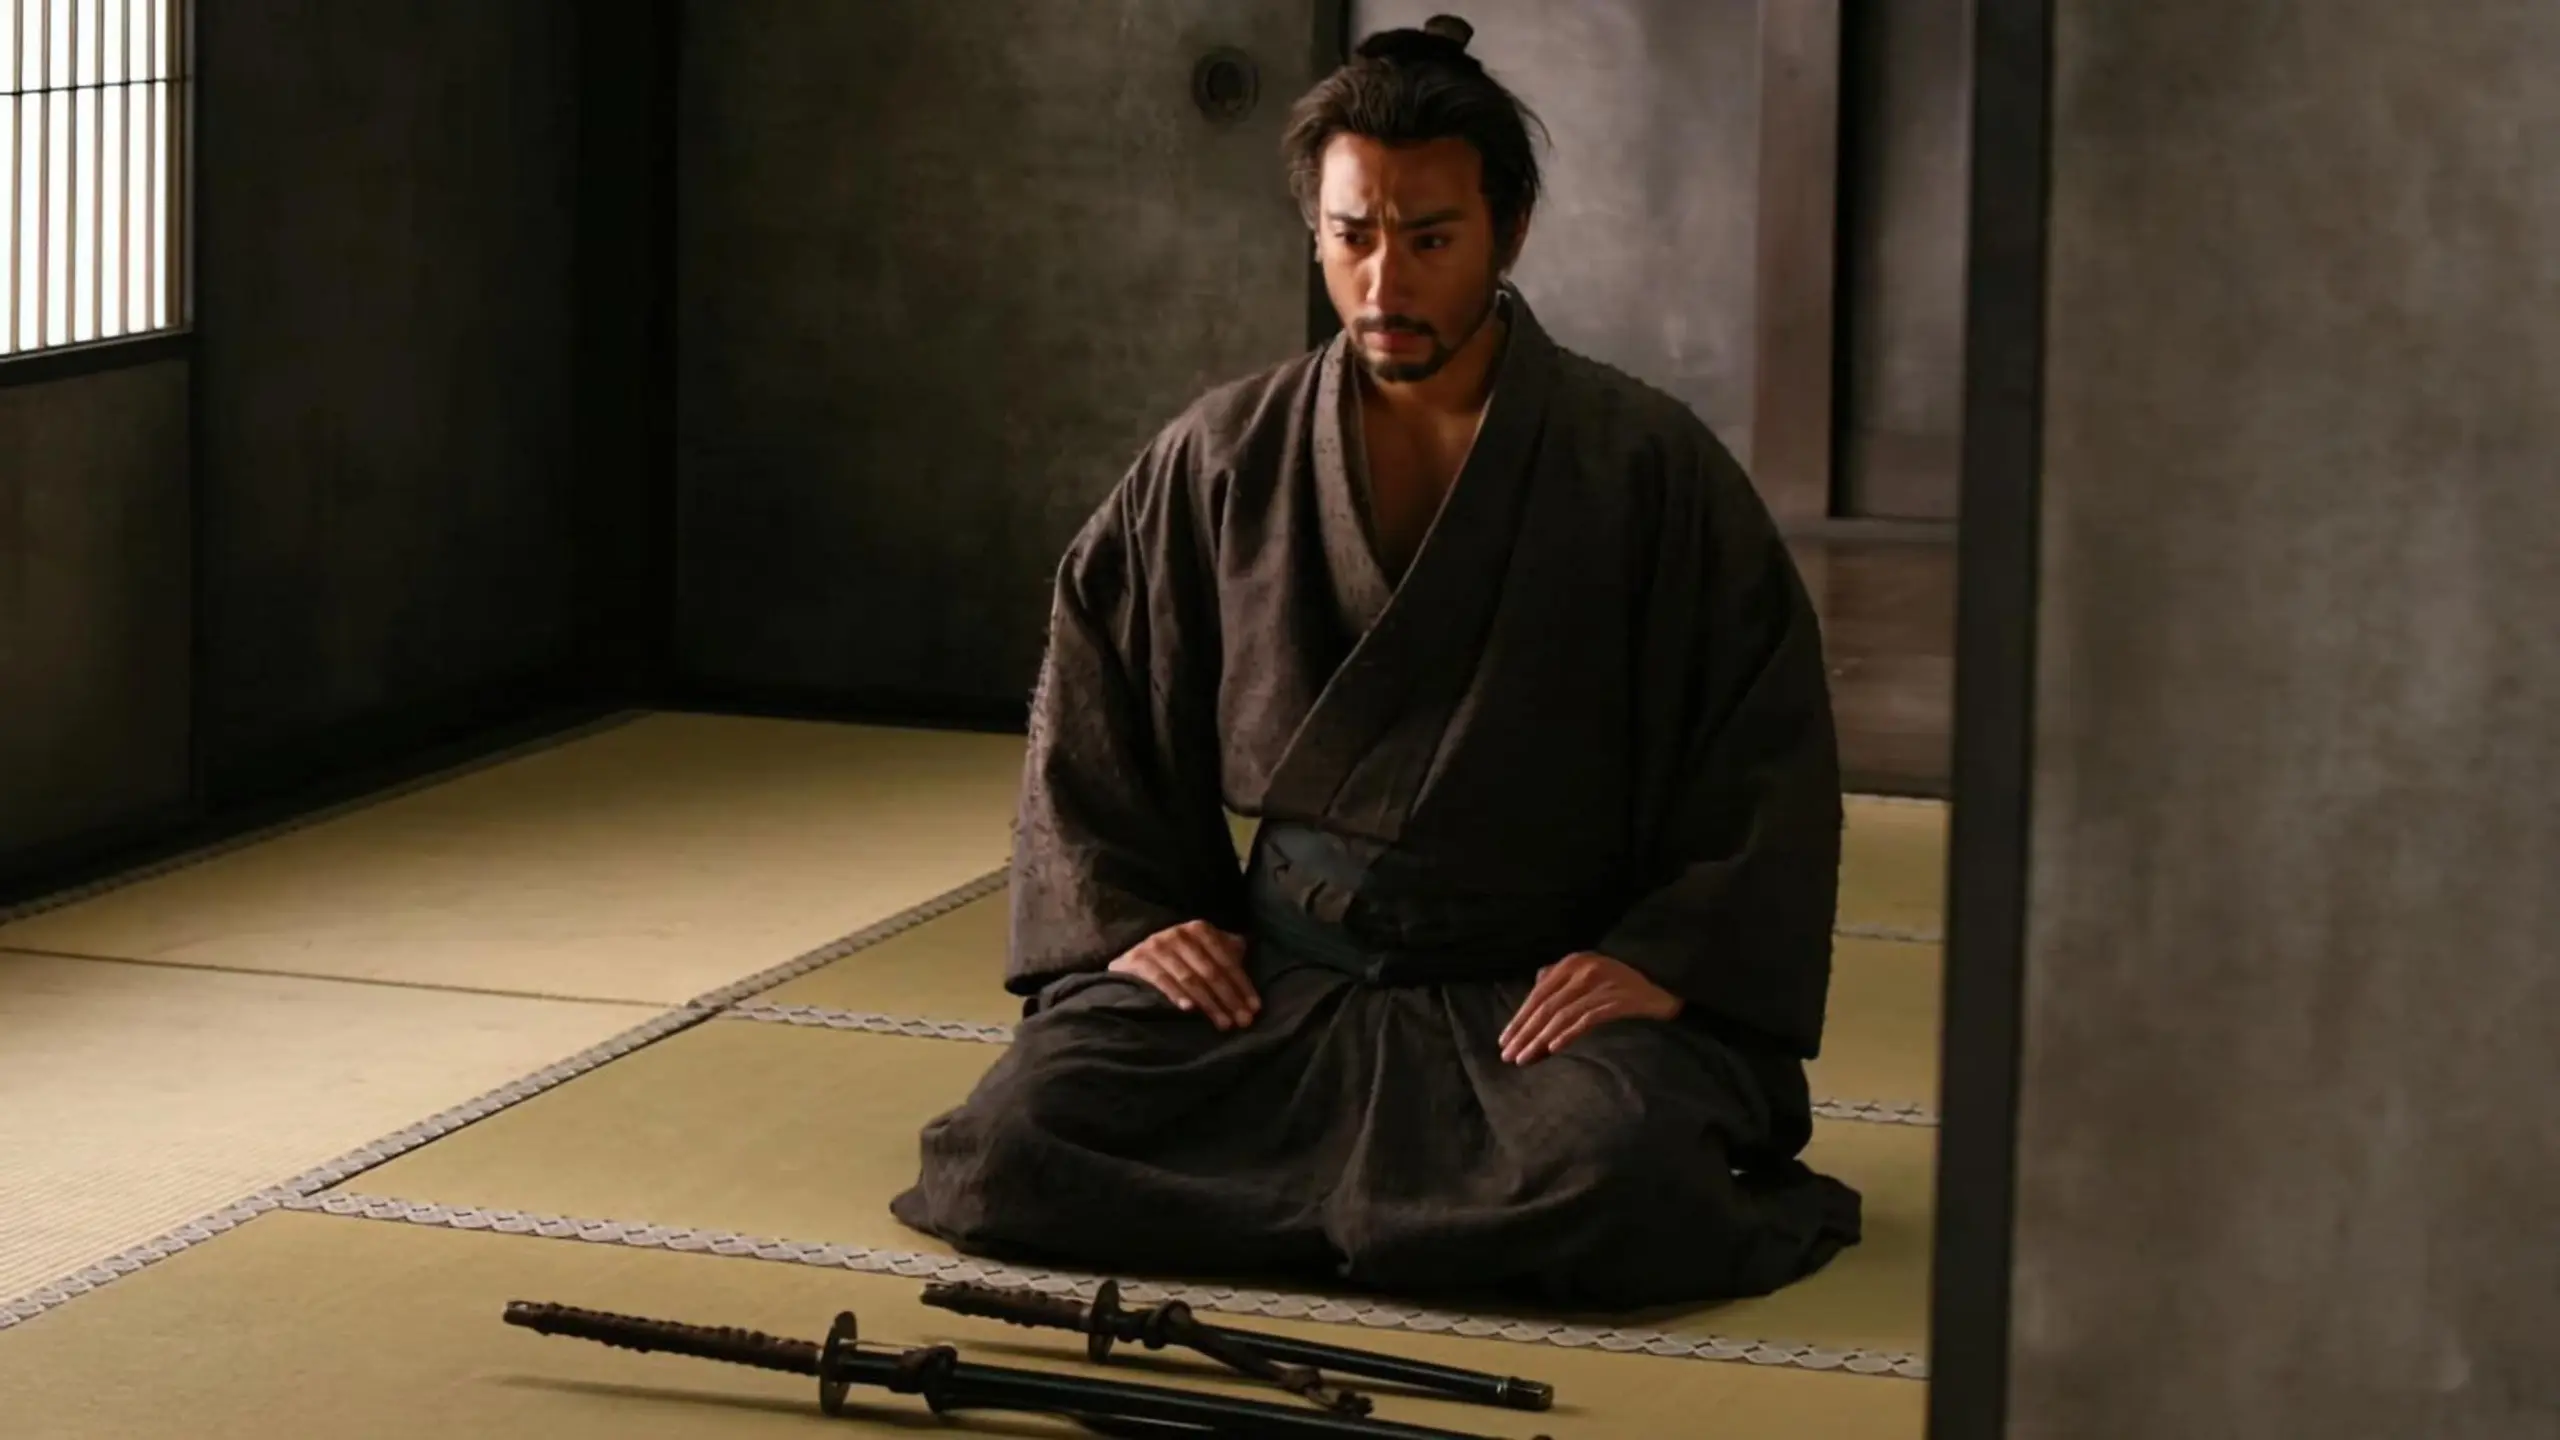 Hara Kiri: Tod eines Samurai